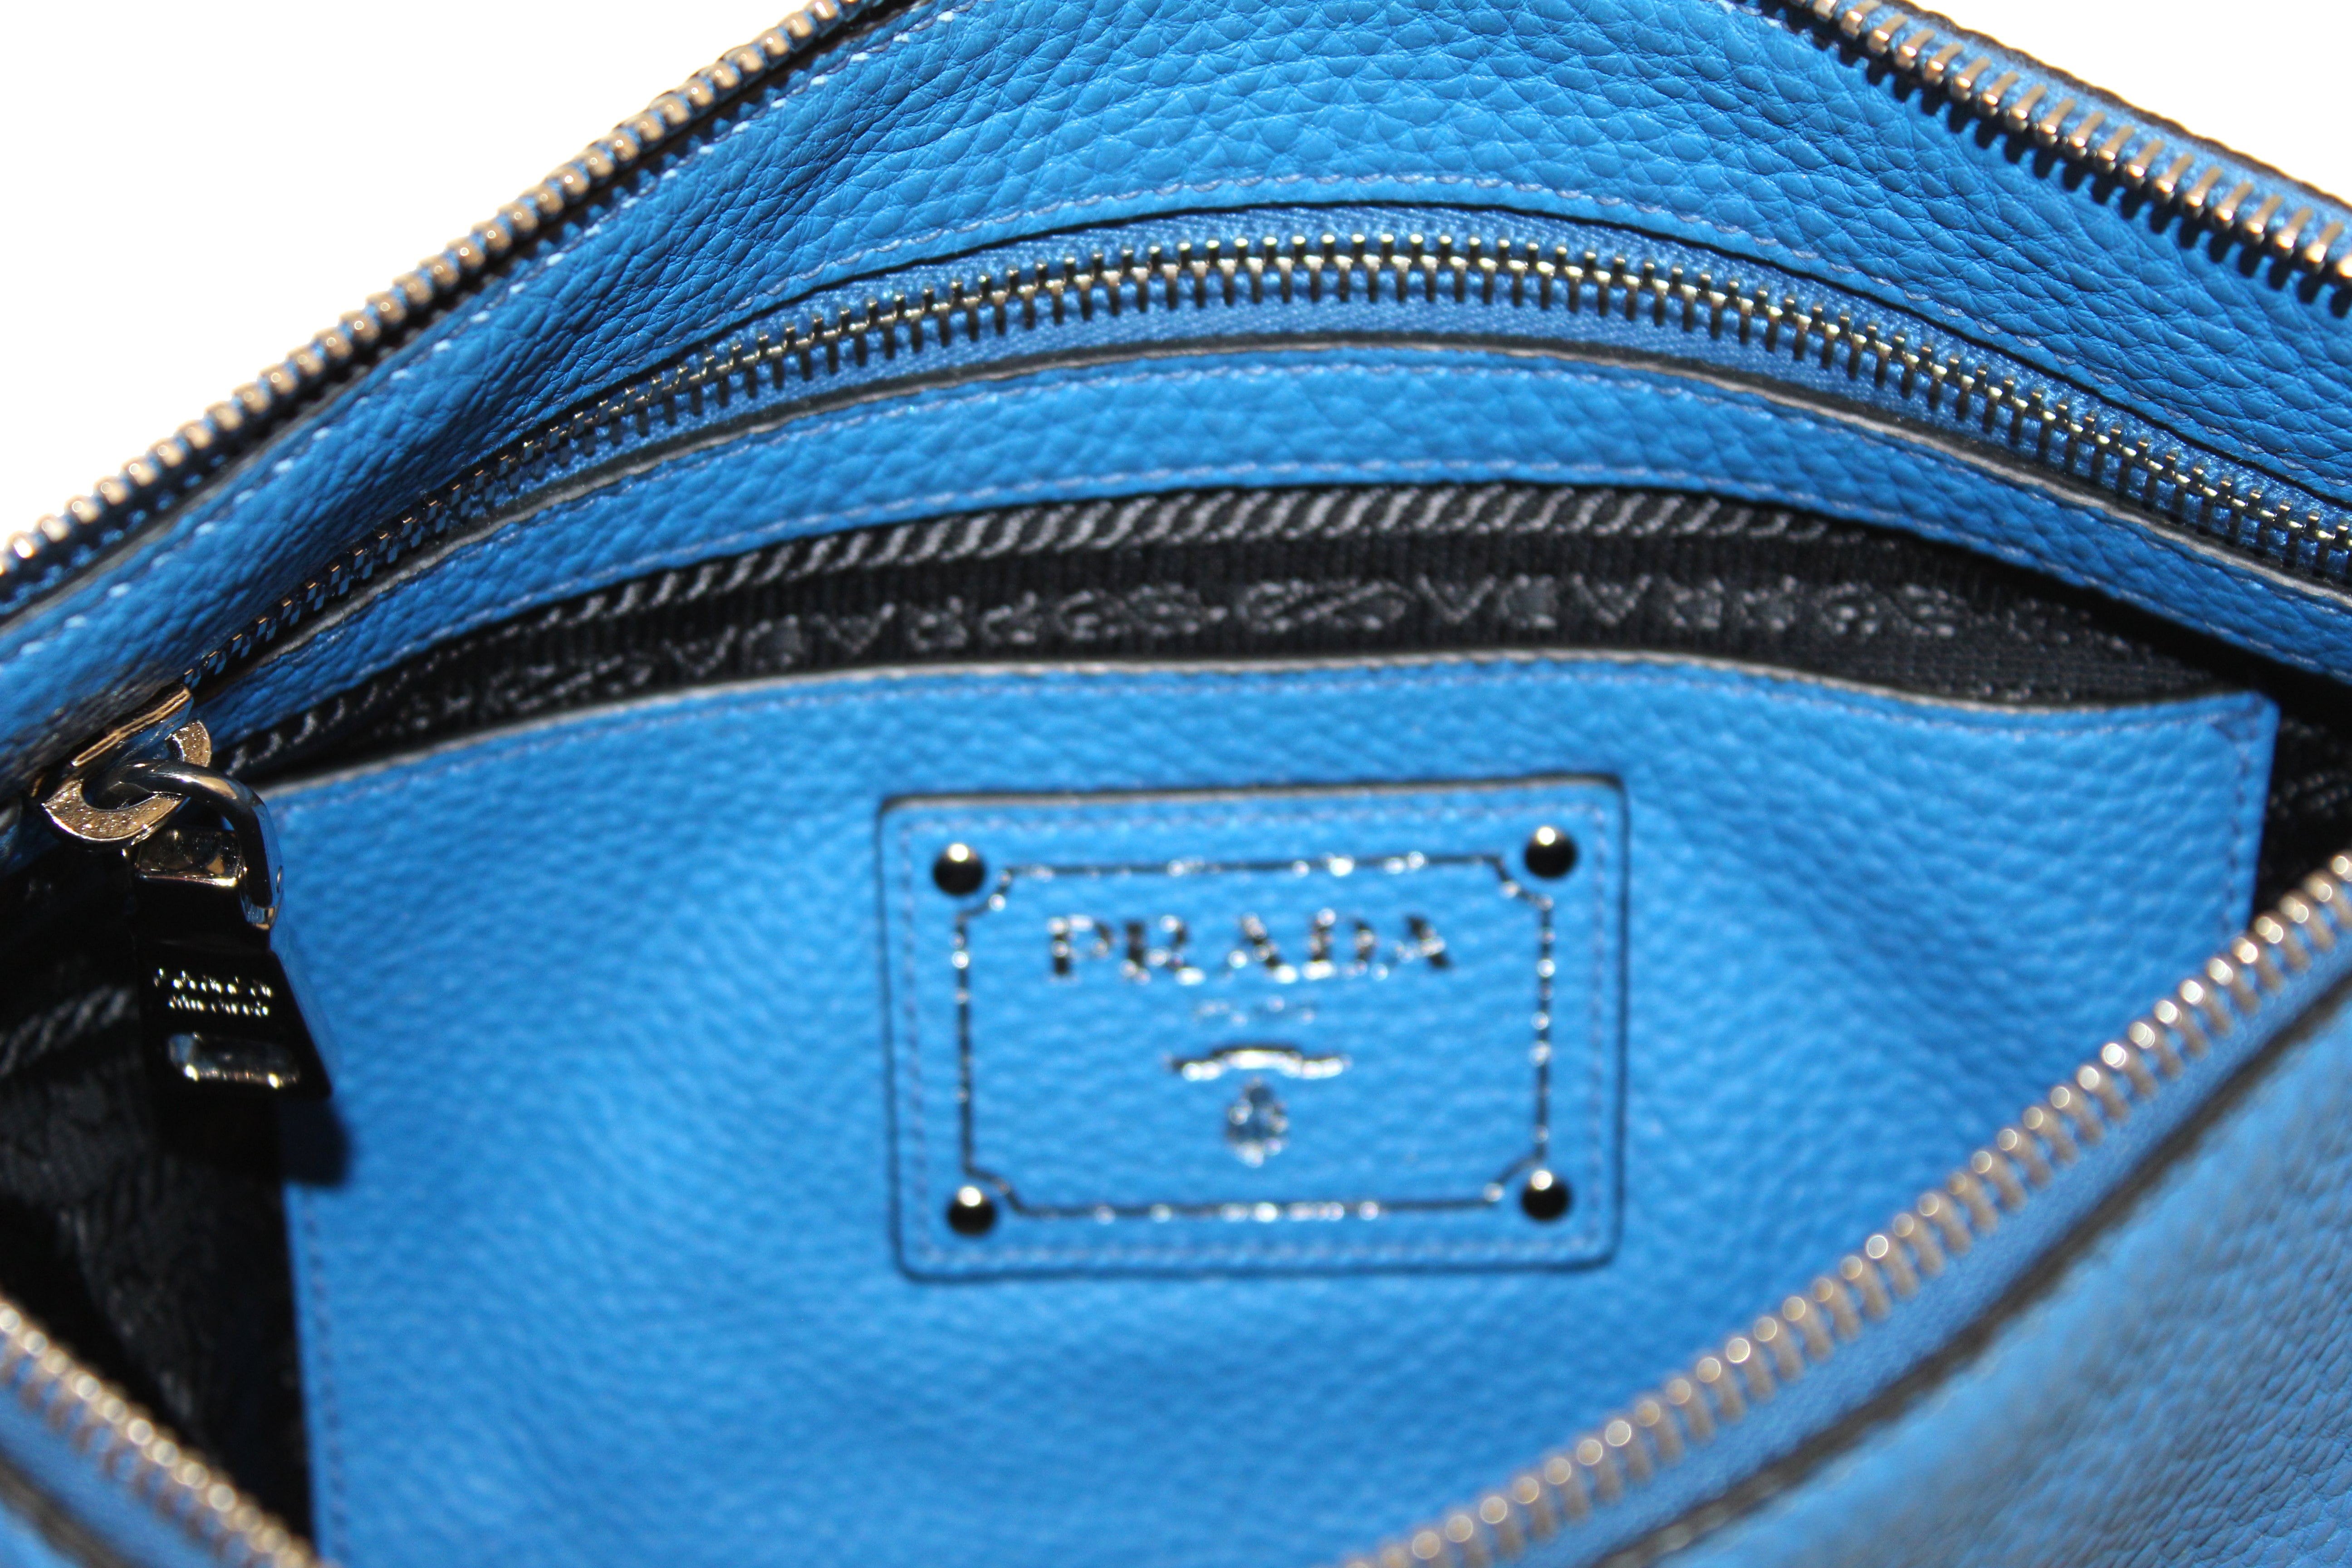 Authentic New Prada Saffiano leather Shoulder/crossbody bag